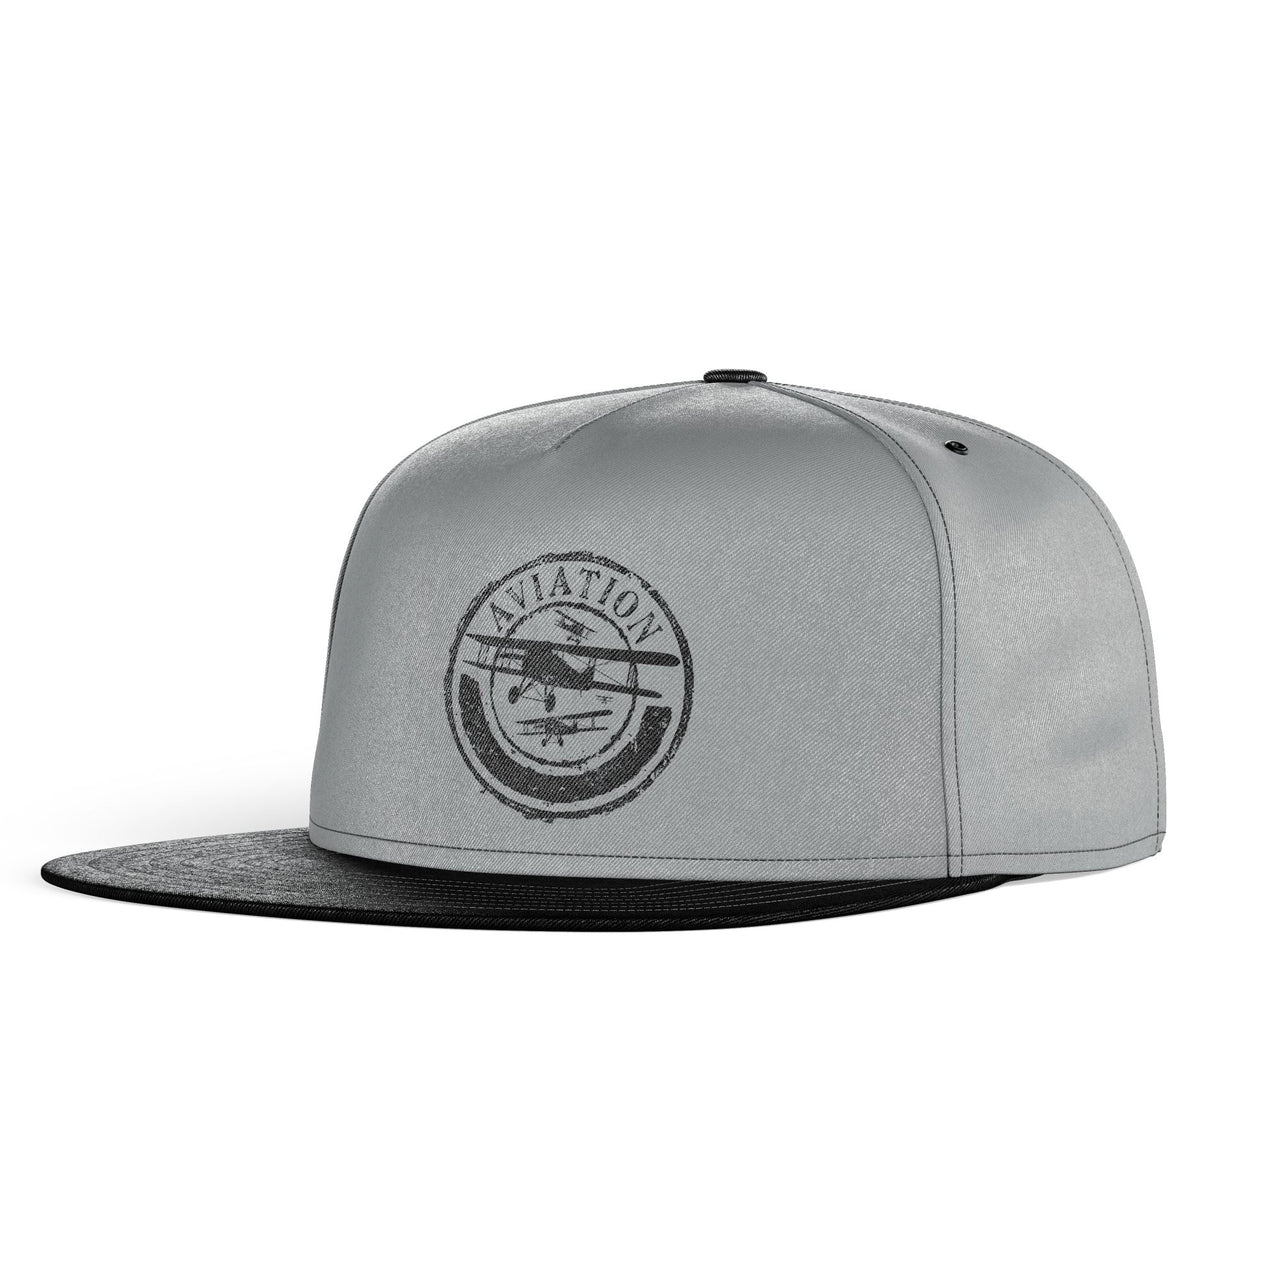 Aviation Lovers Designed Snapback Caps & Hats